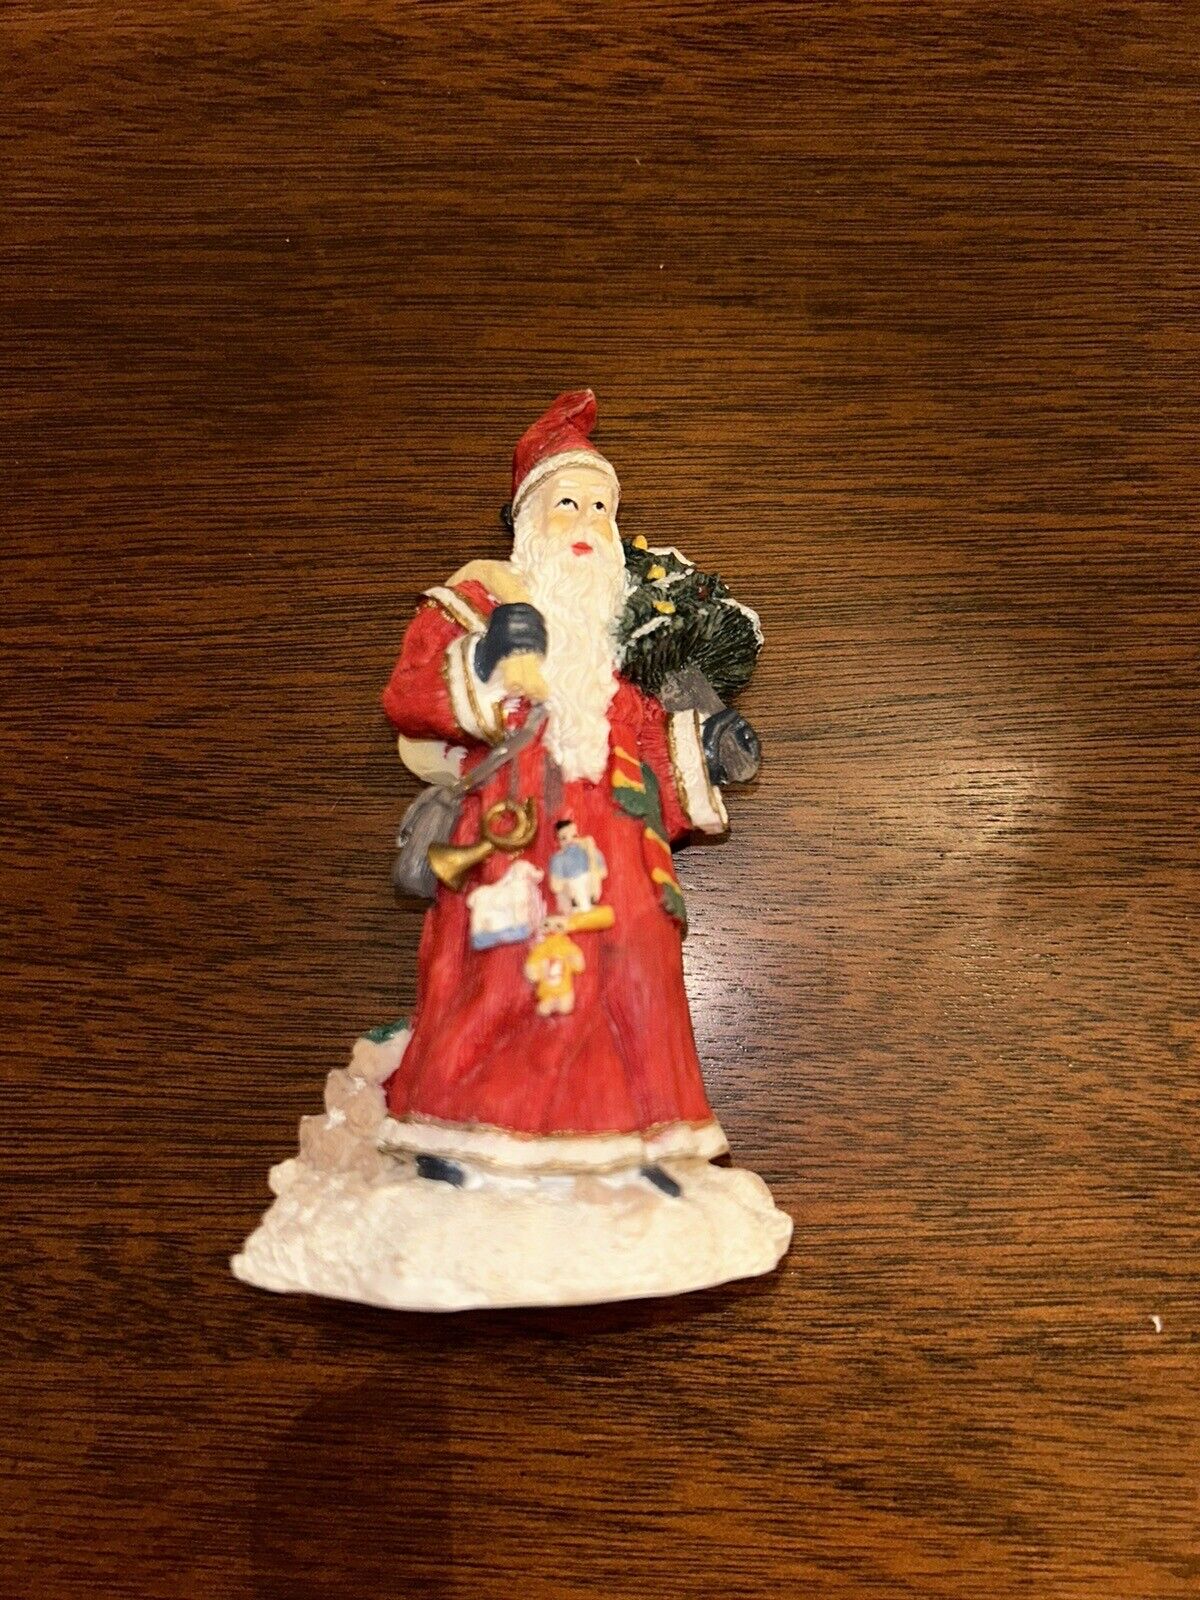 Weihnachtsmann German Christmas Santa Claus International Germany Figurine 1994